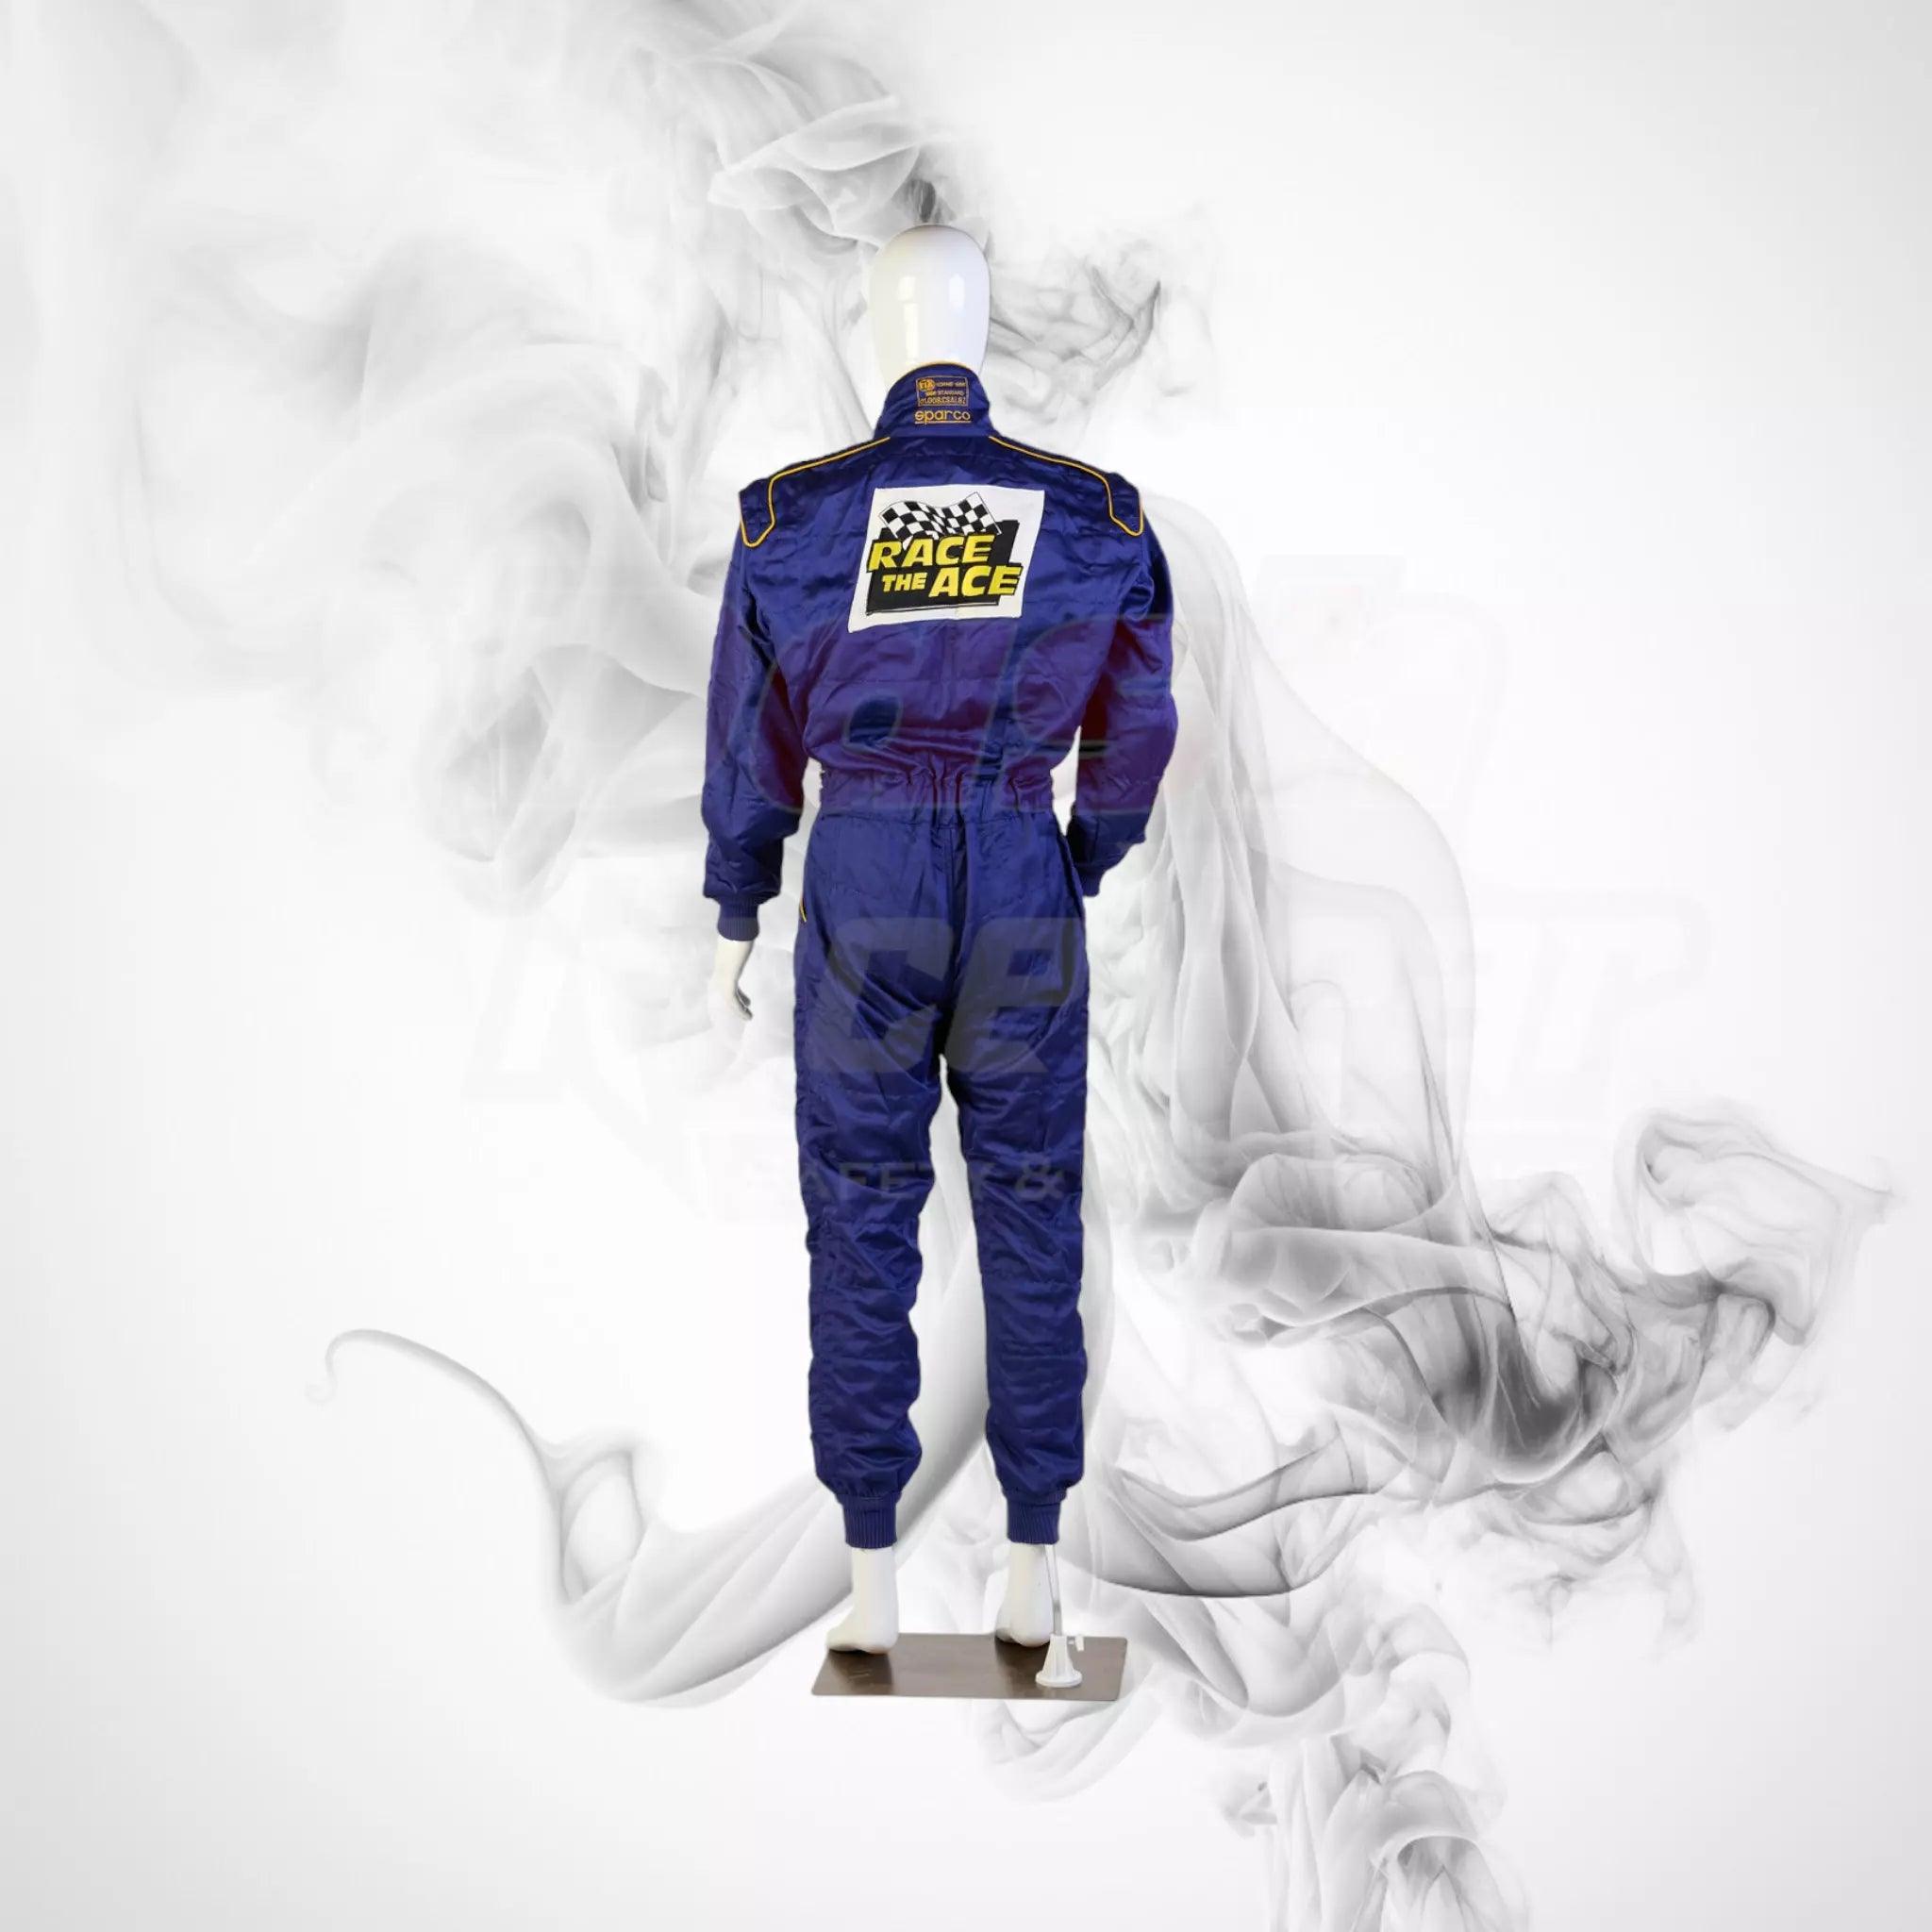 1995 ‘Race The Ace’ Cadbury's Chocolate Sparco NIGEL MANSELL’S Race Suit - Dash Racegear 